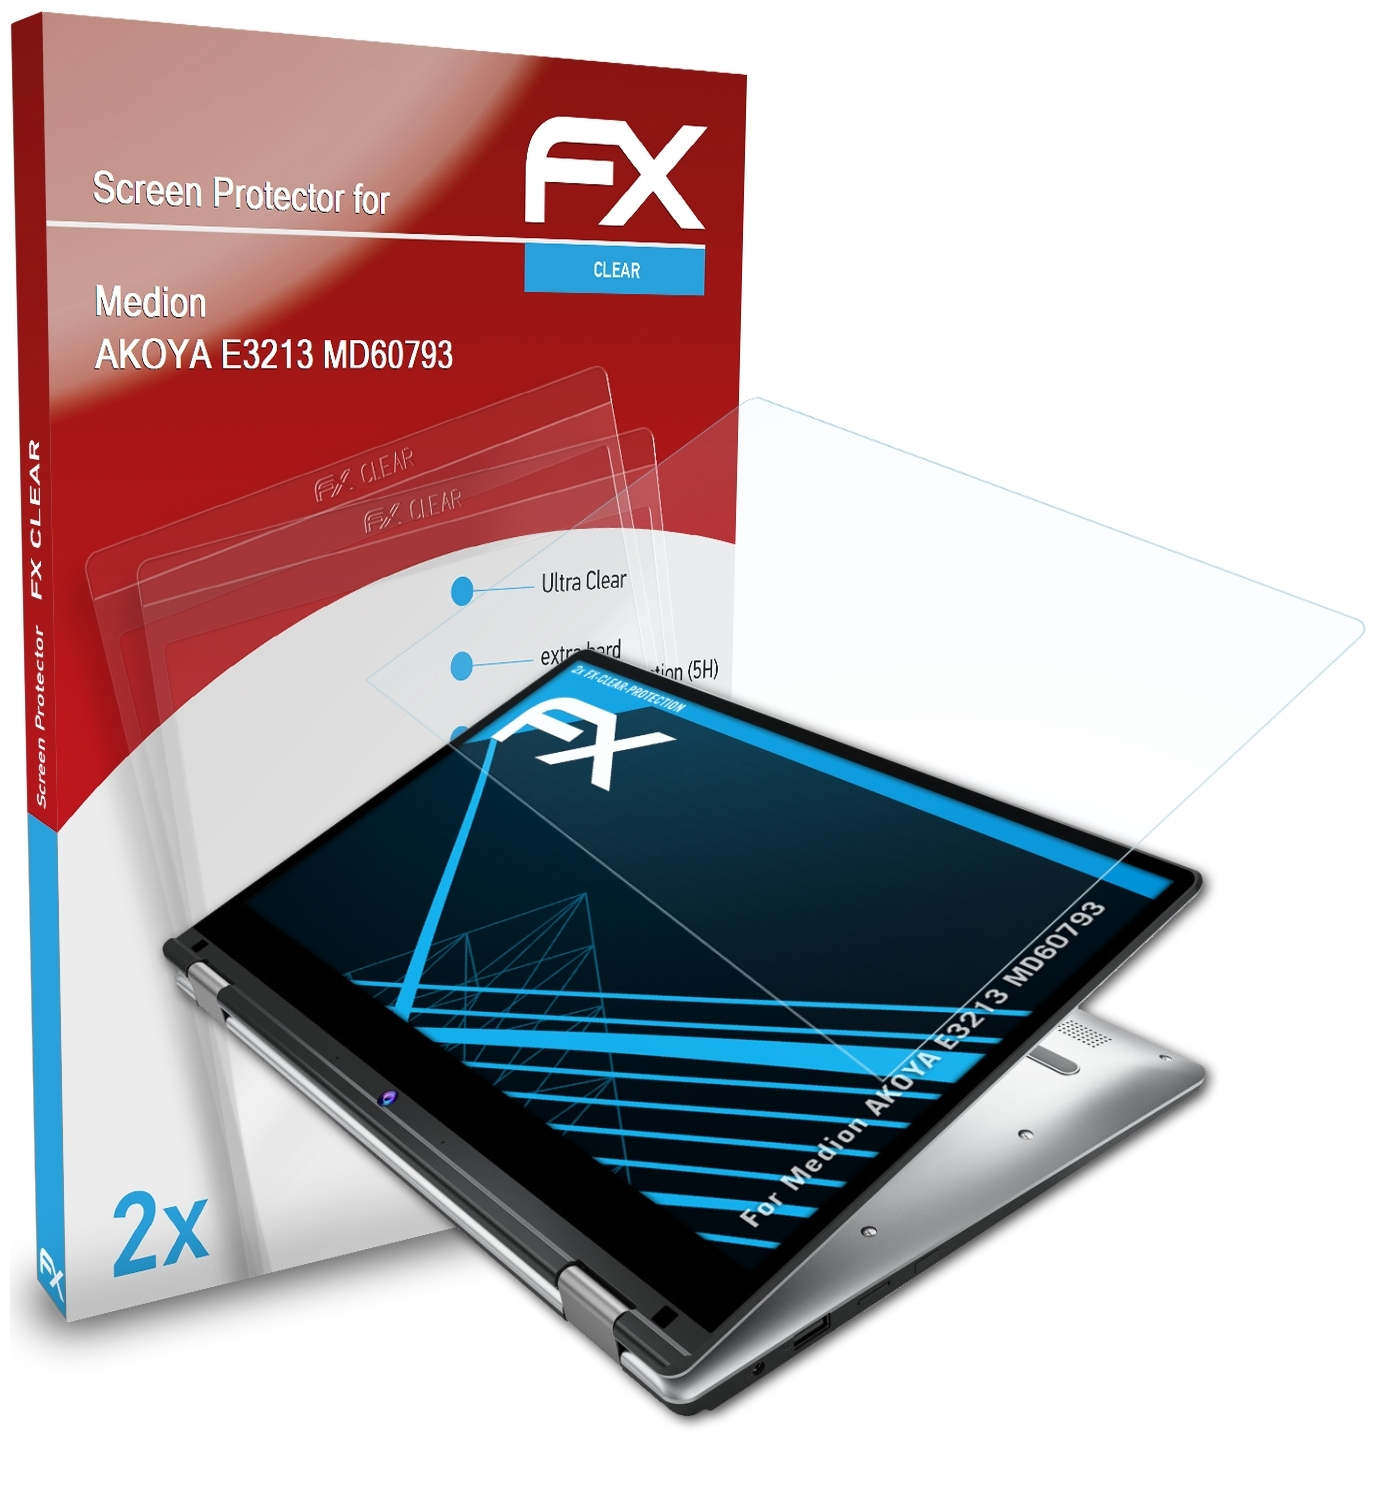 2x (MD60793)) ATFOLIX Displayschutz(für AKOYA E3213 FX-Clear Medion